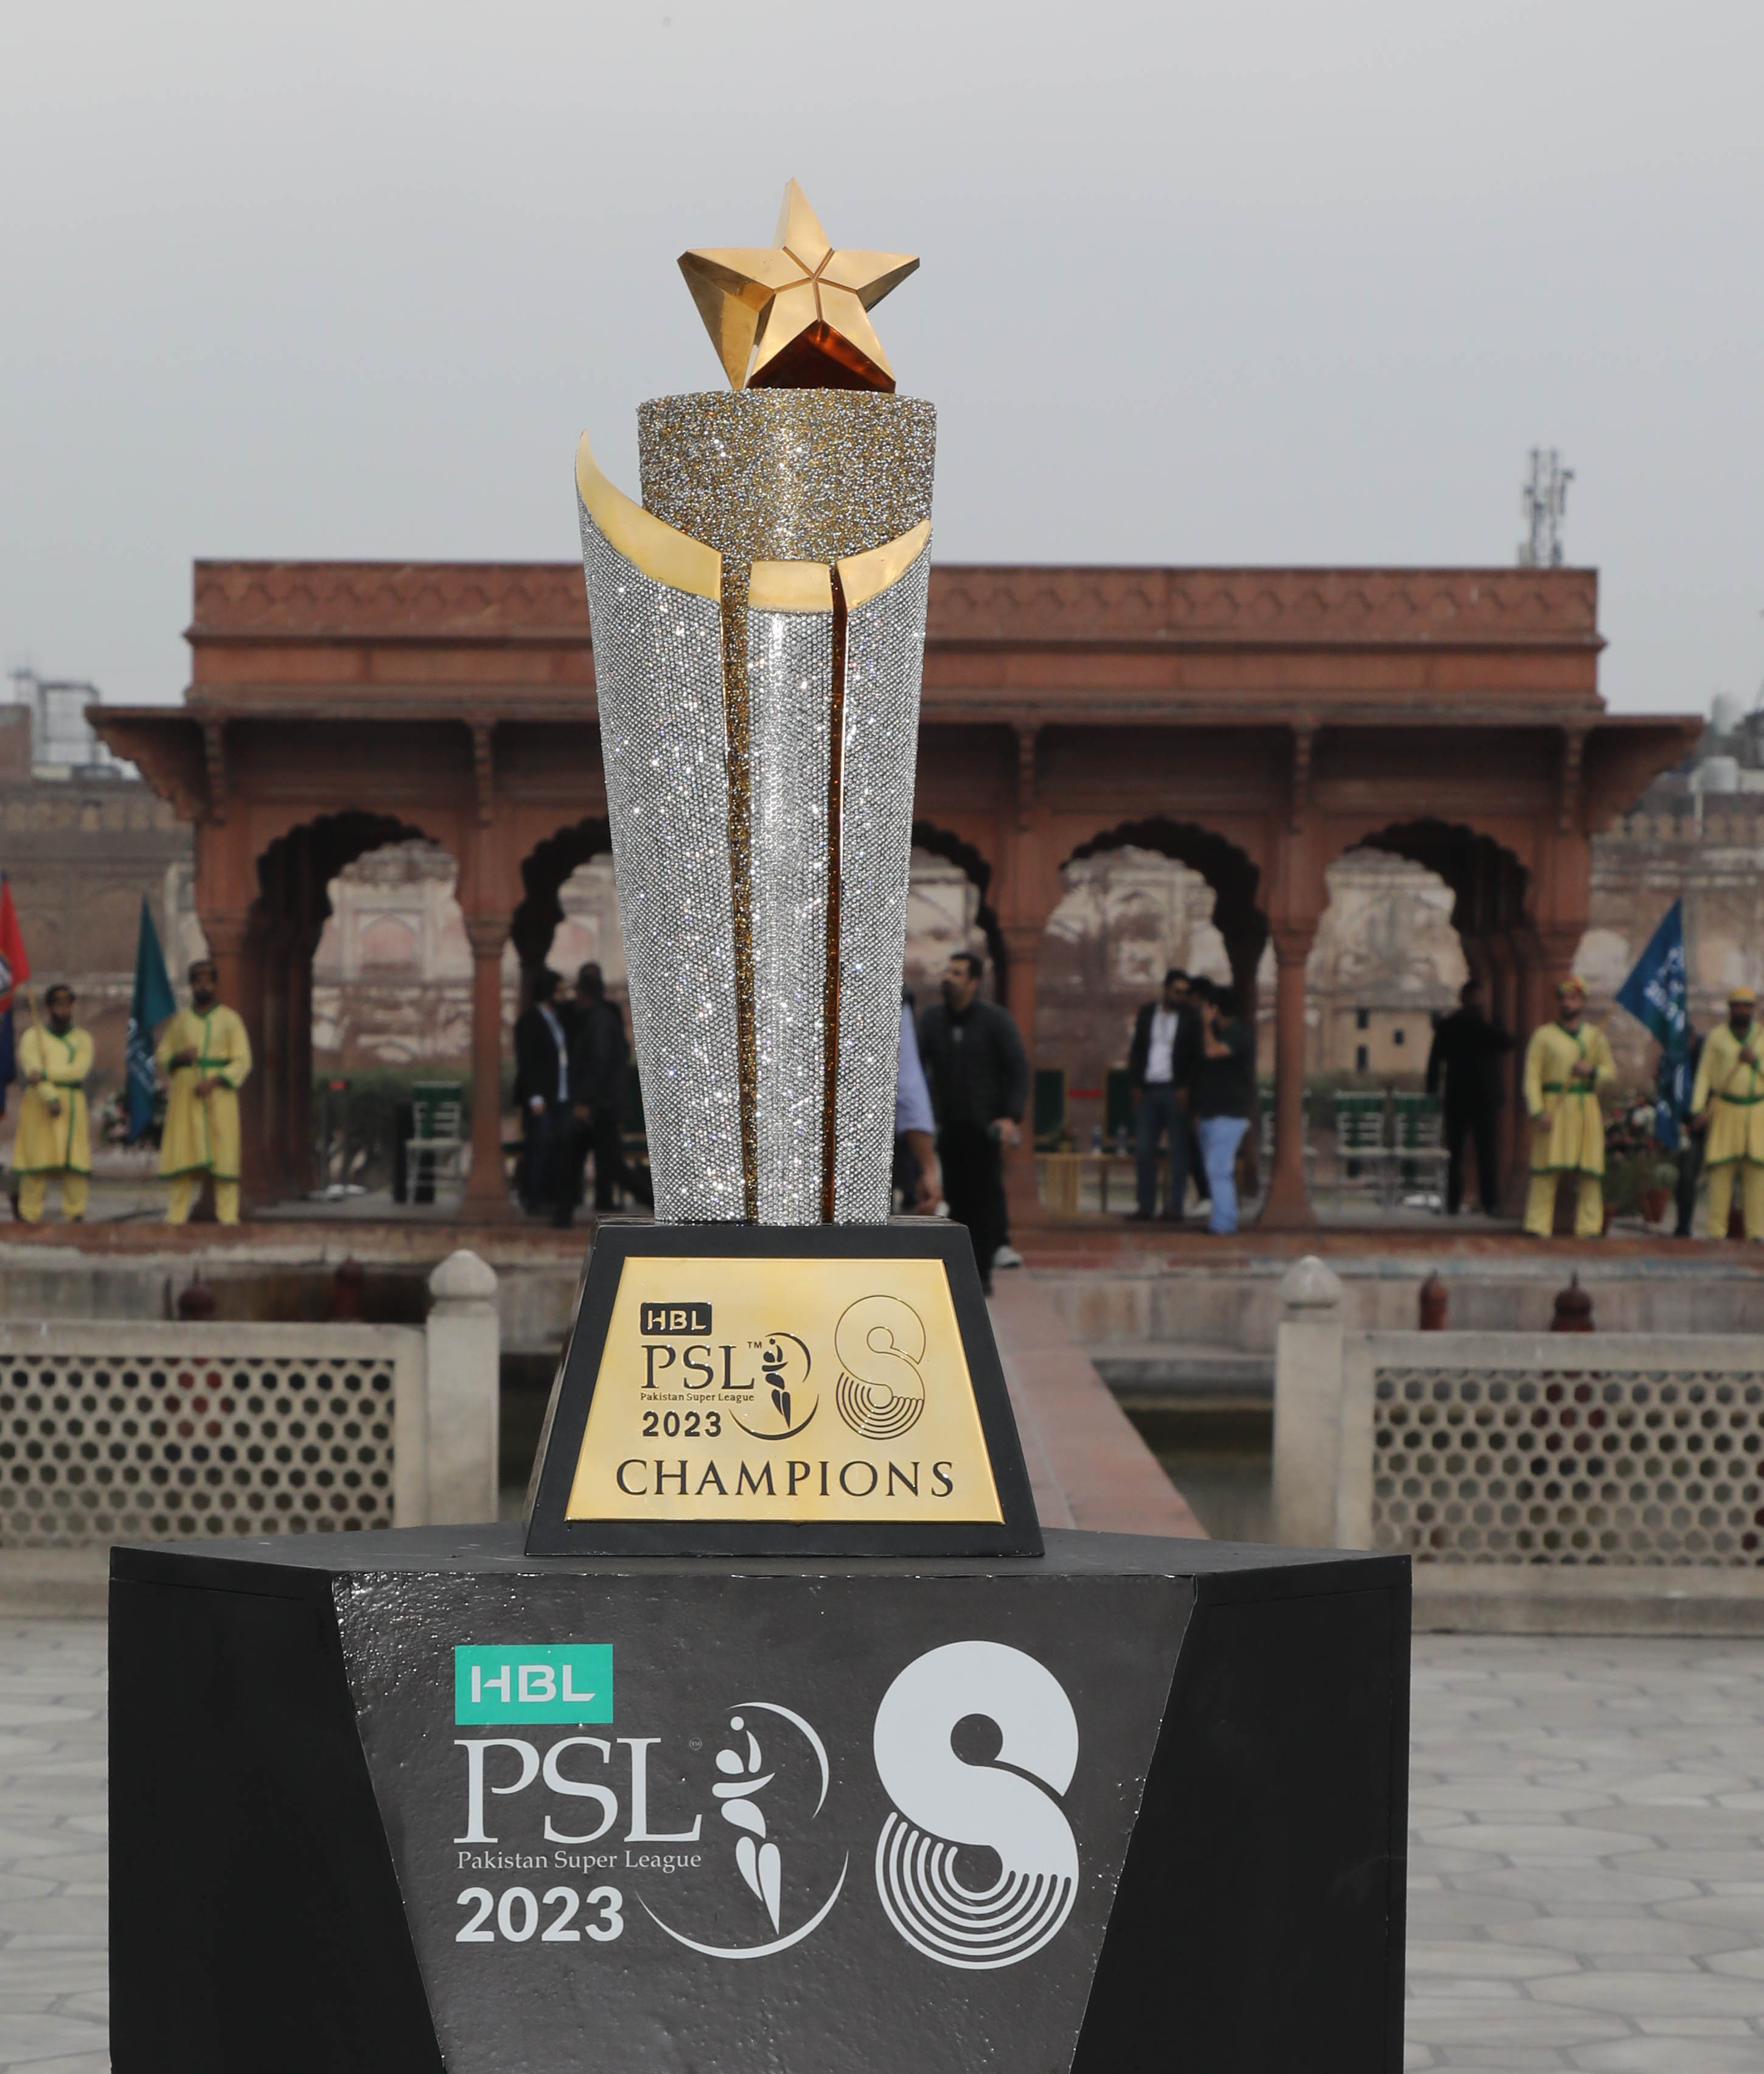 HBL PSL 8 trophy unveiled at historic Shalimar Gardens Press Release